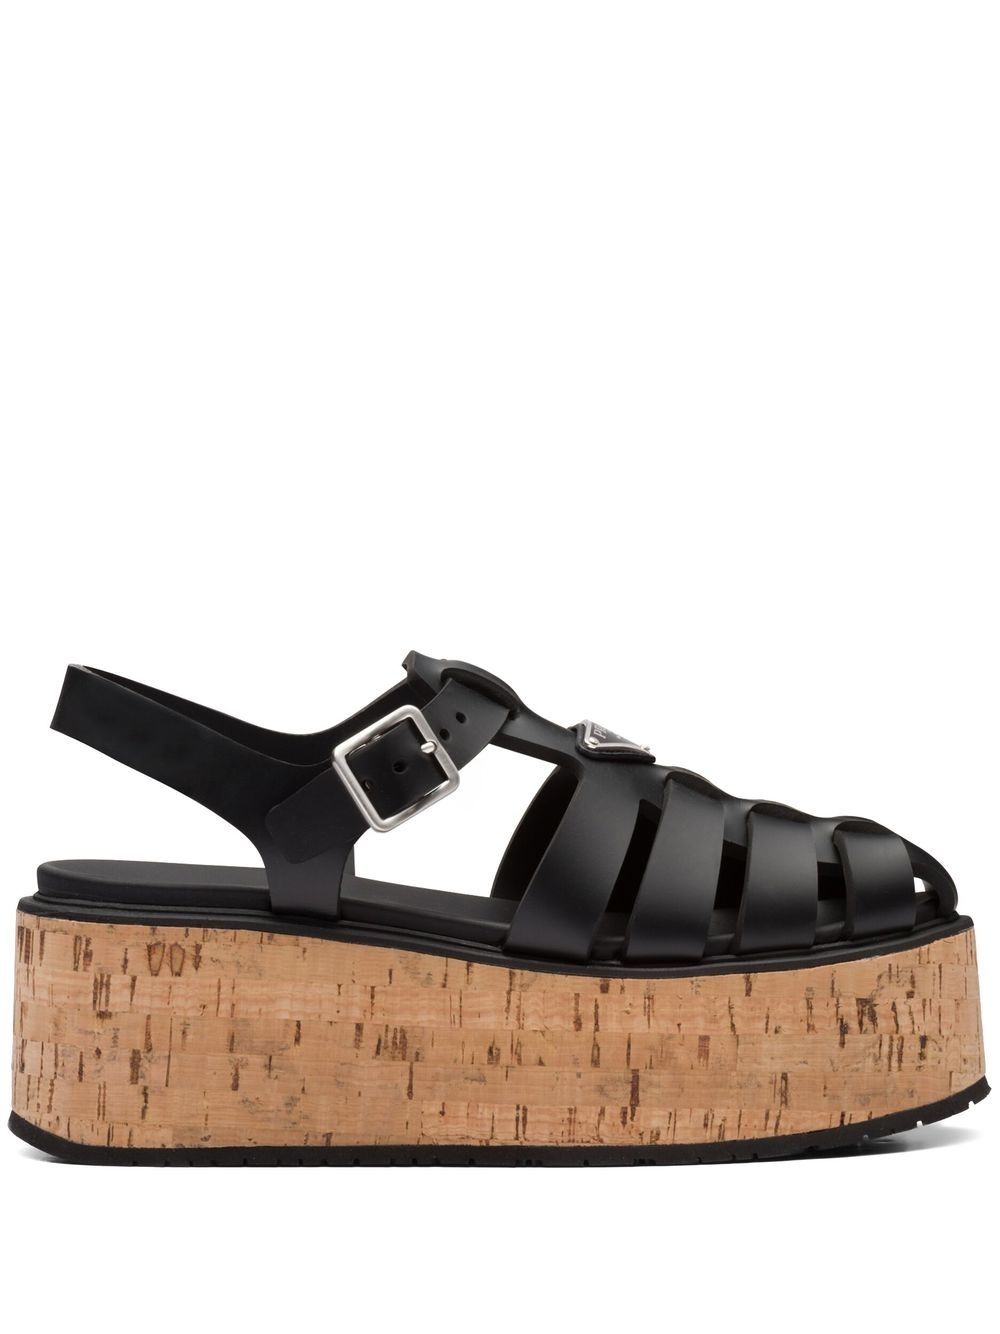 Prada platform wedge sandals - Black